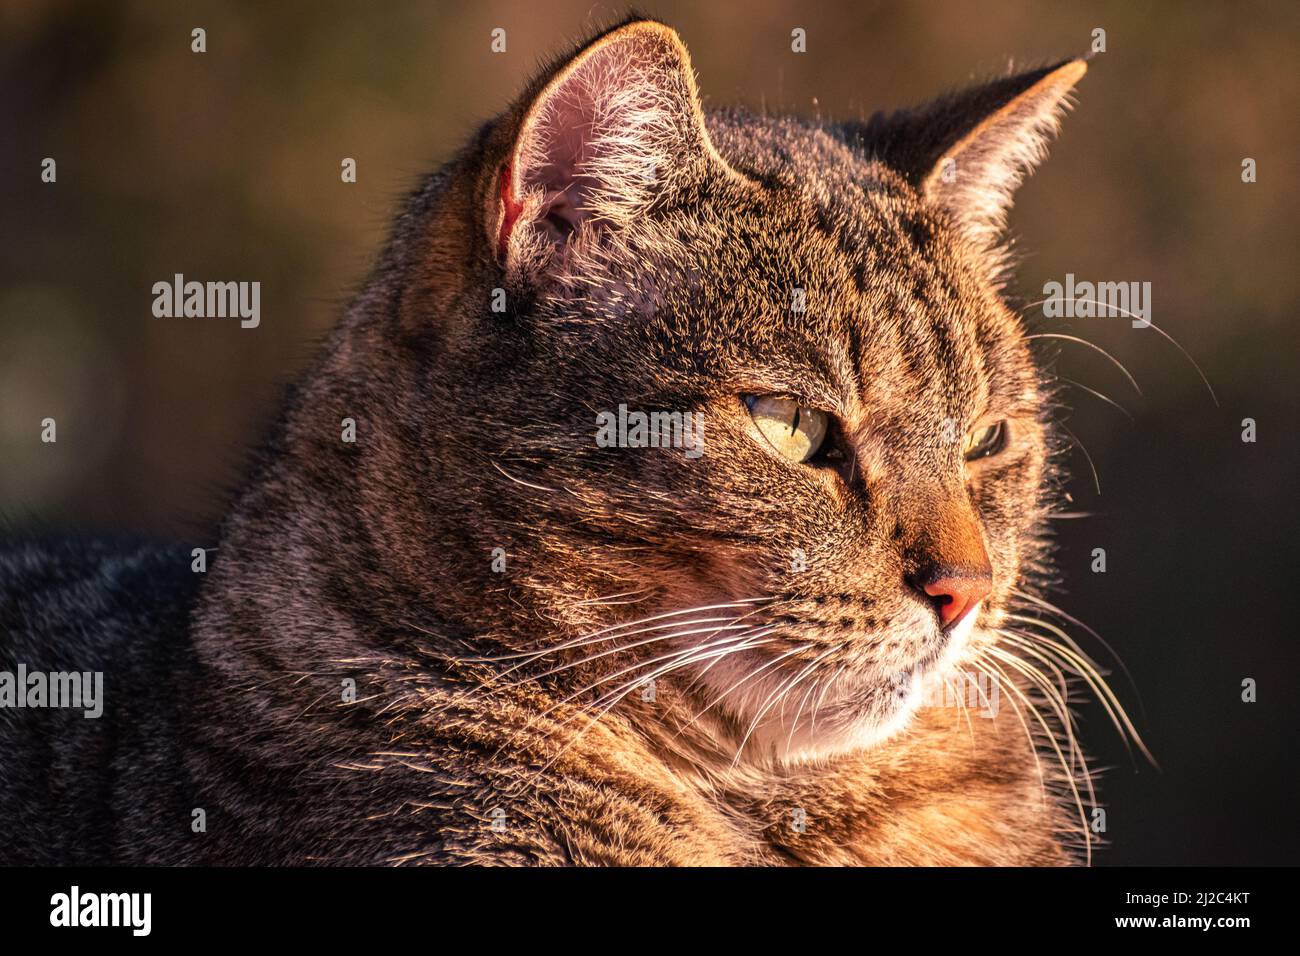 Pet cat sunning himself Stock Photo